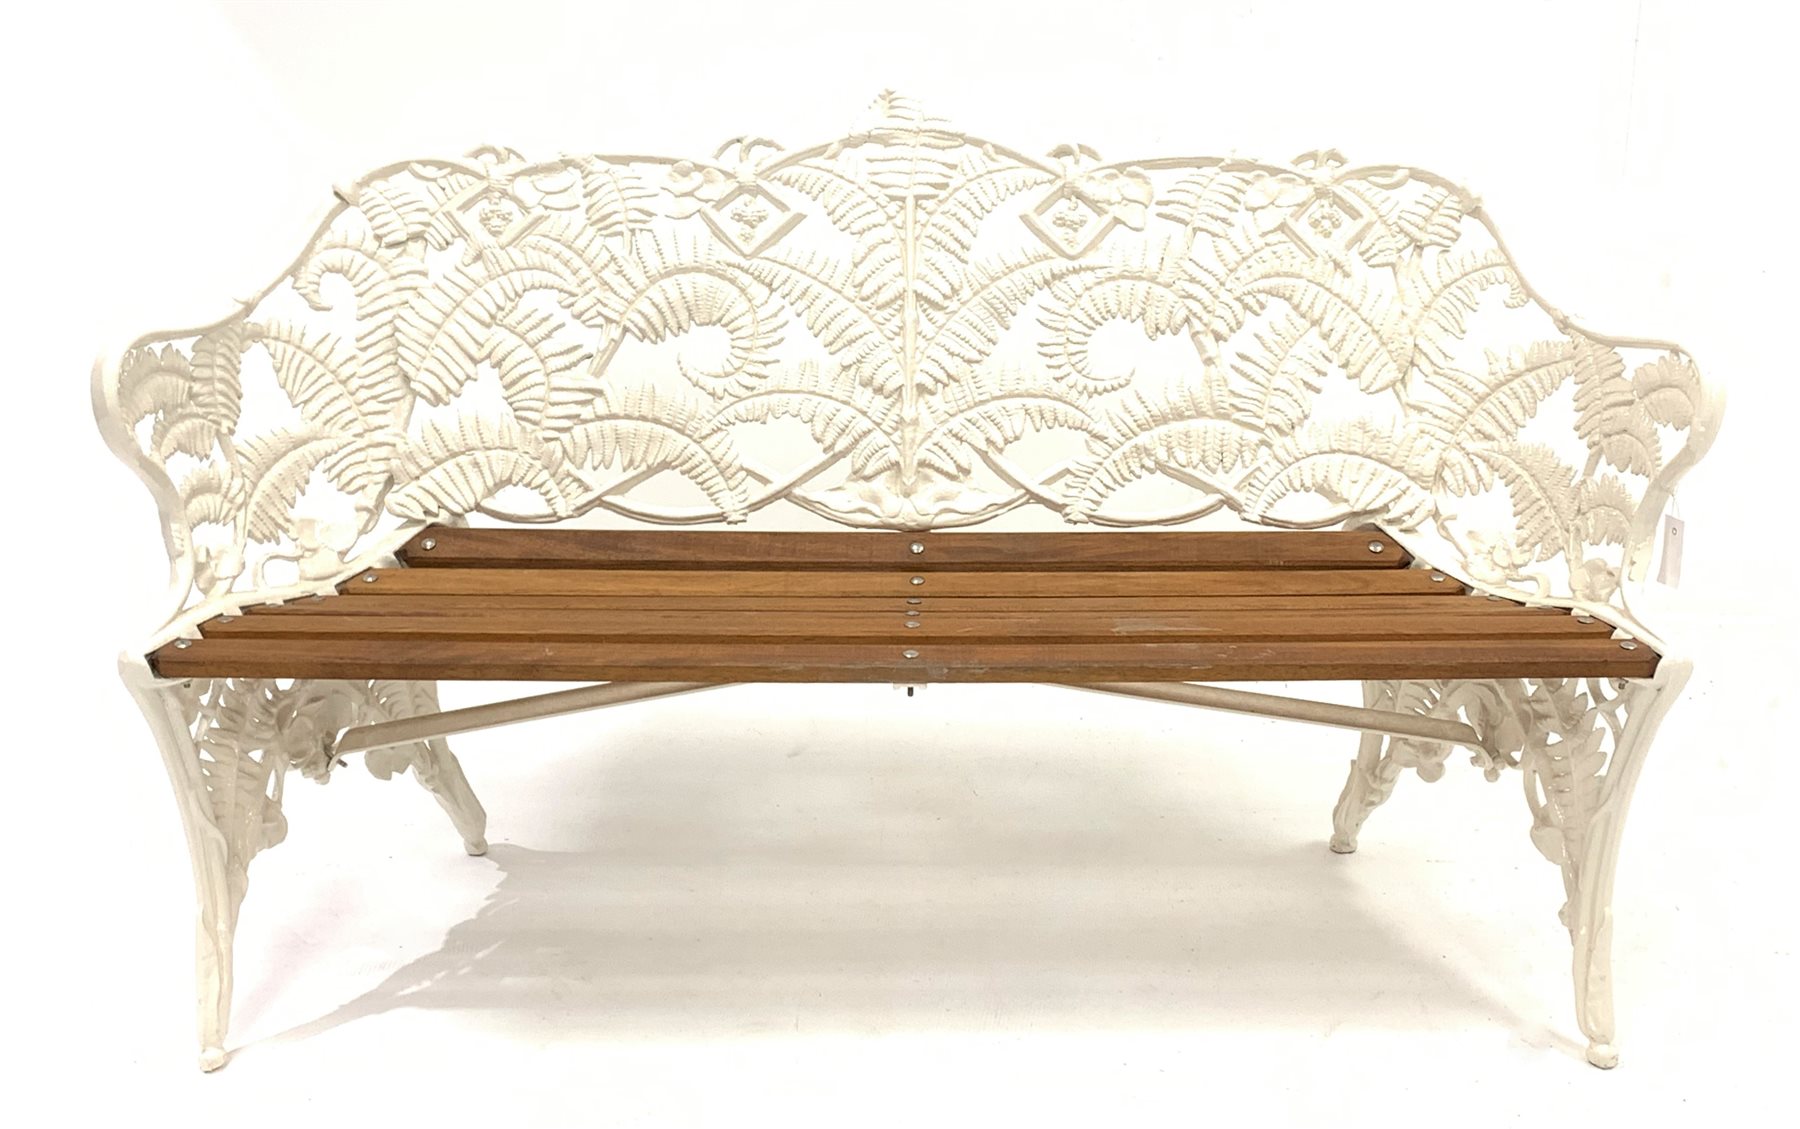 Coalbrookdale style cast metal fern pattern, hardwood slatted seat, white painted finish,